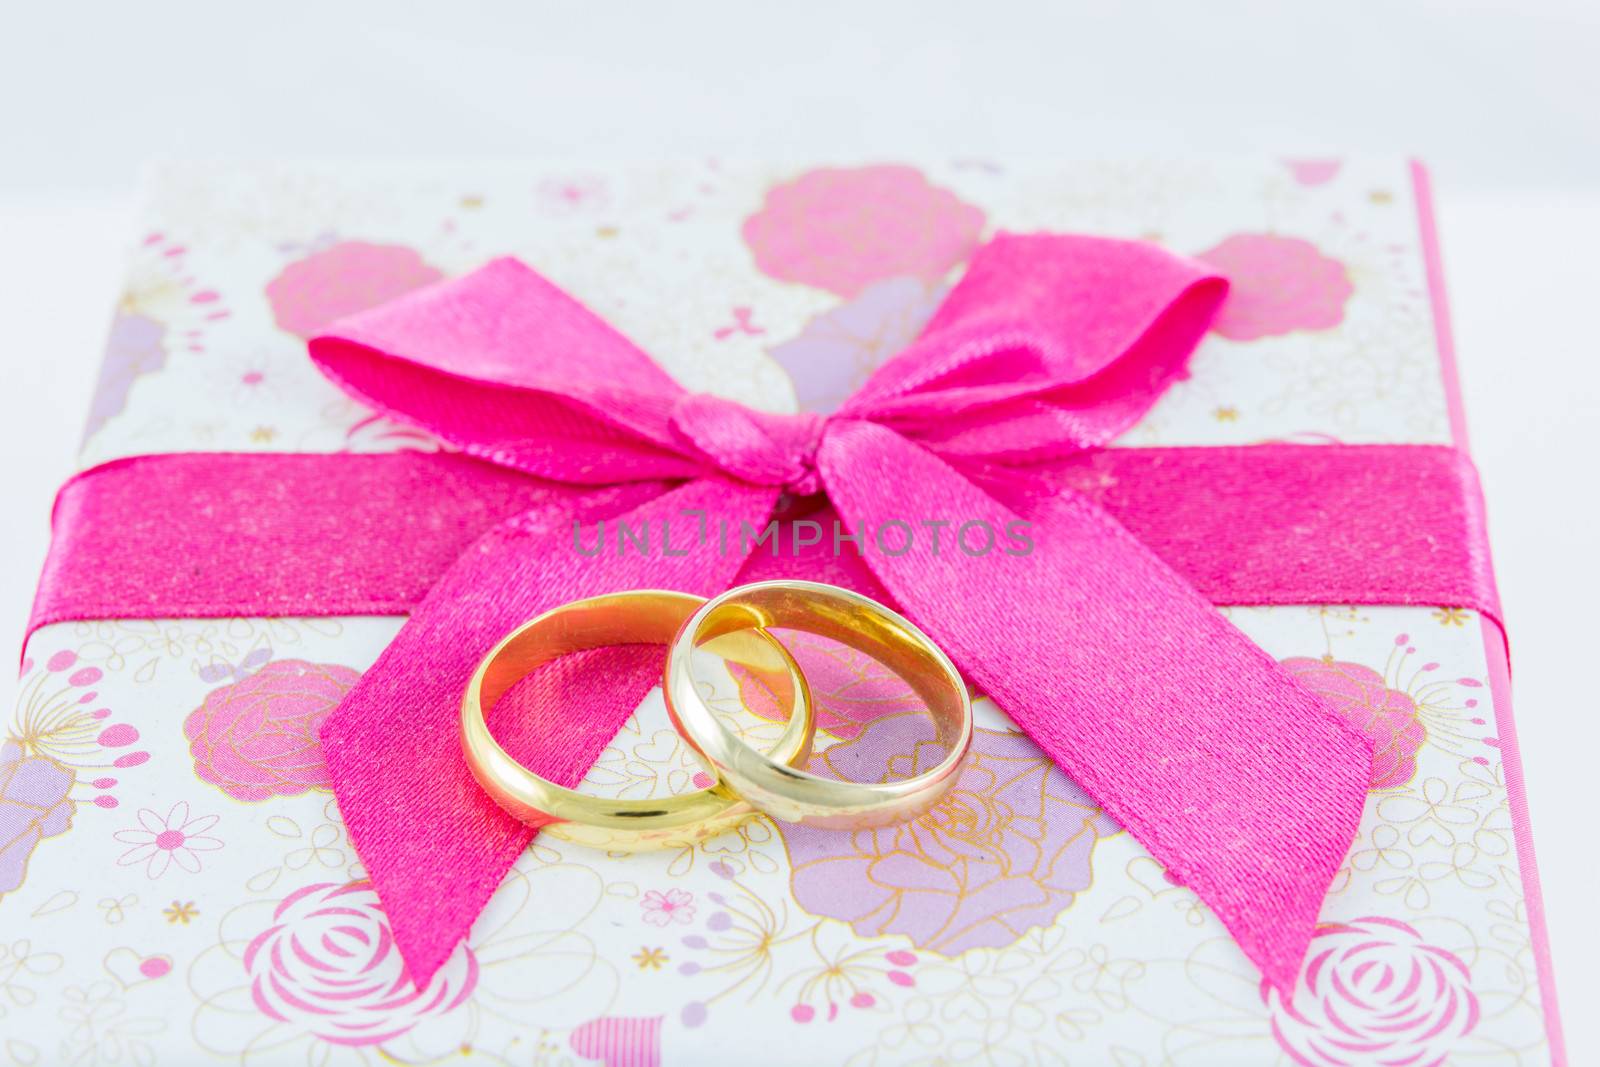 Wedding rings on gift box by Sorapop